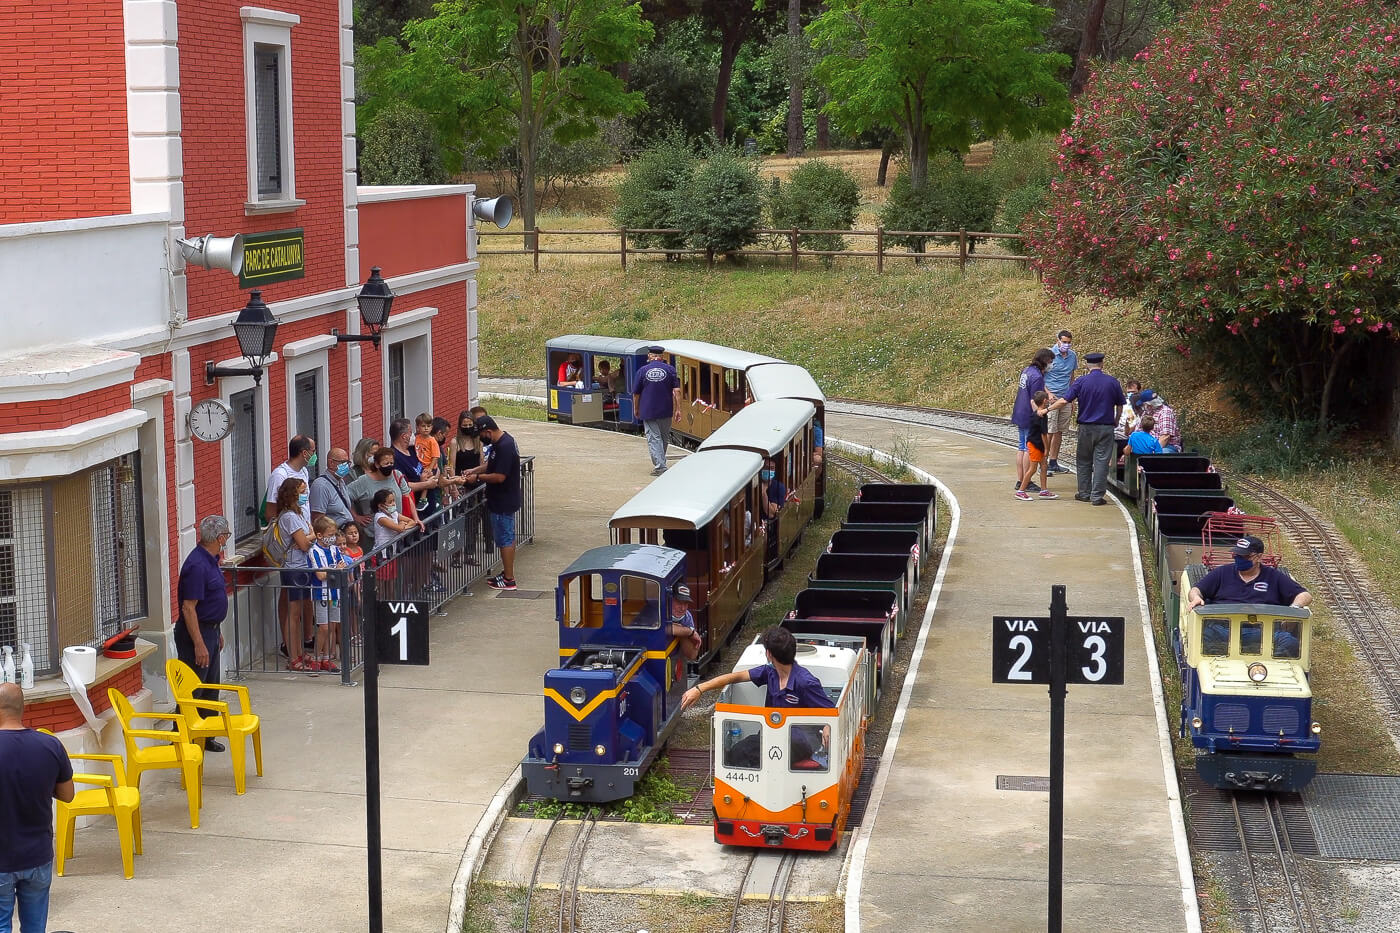 Tren en miniatura en Sabadell – Parc de Catalunya